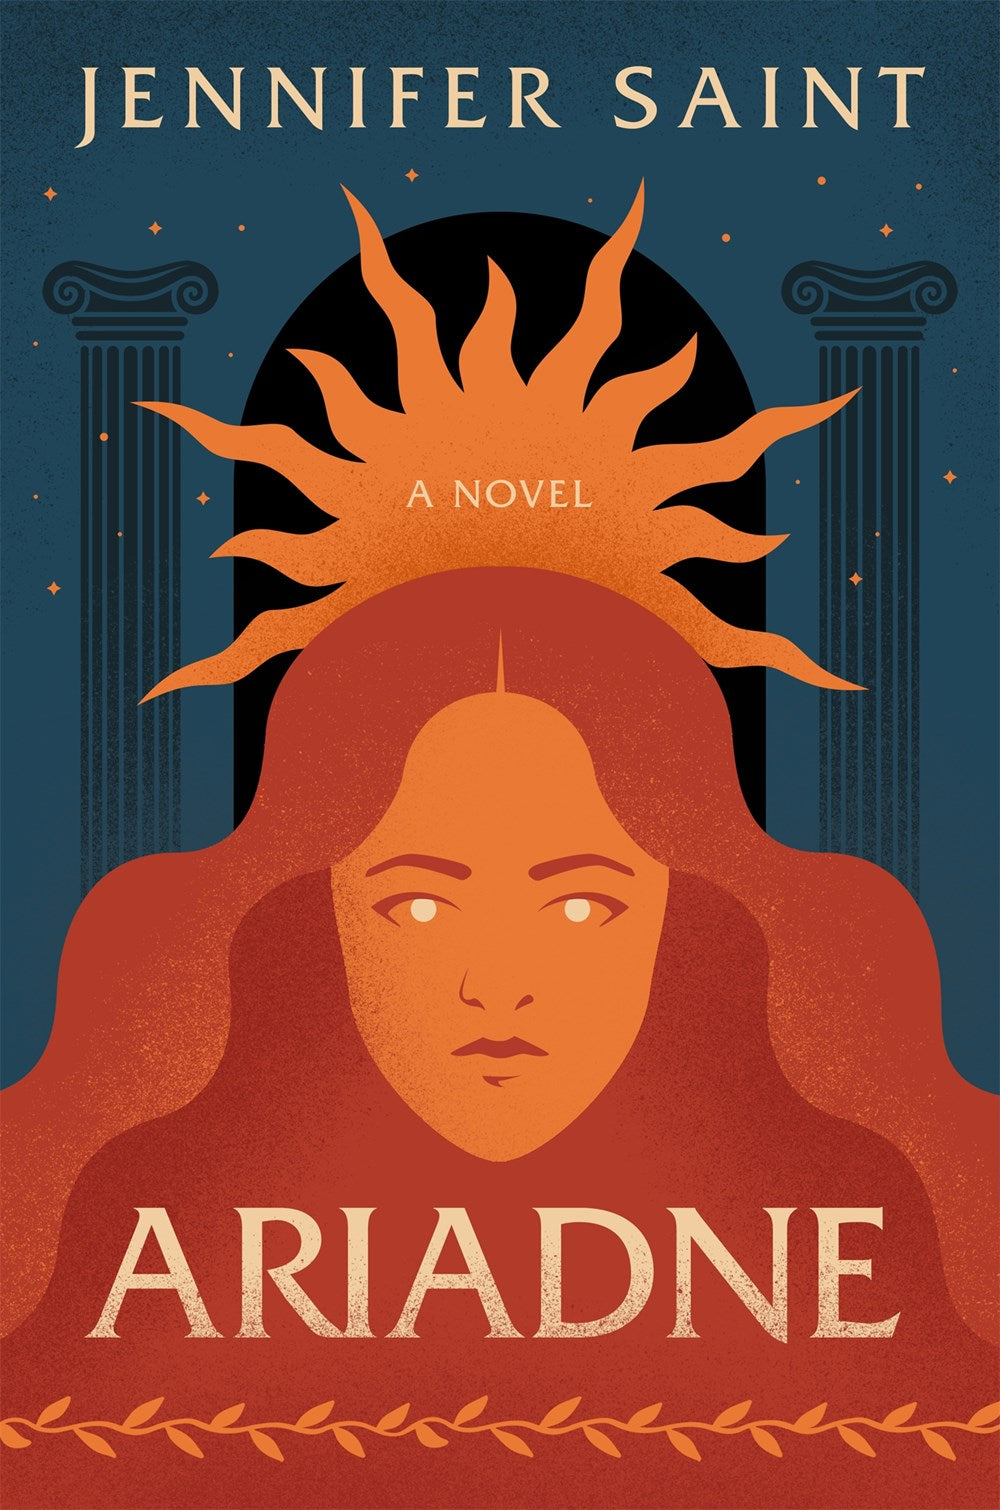 Ariadne: A Novel by Jennifer Saint